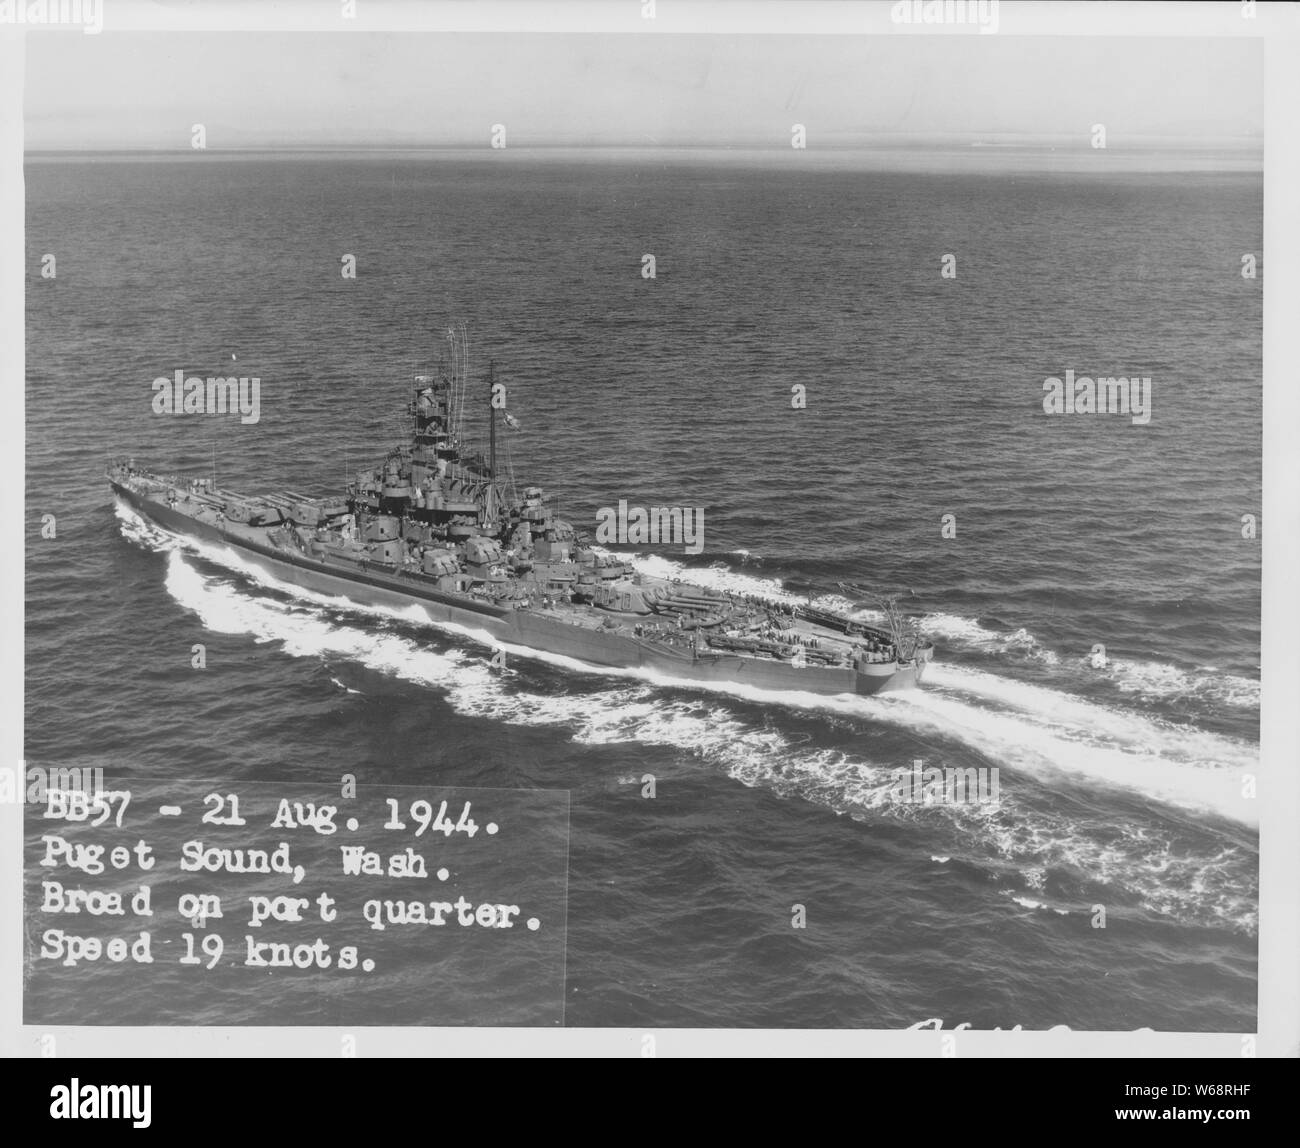 US Naval Battleship Photo Print USN Navy USS SOUTH DAKOTA BB 57 